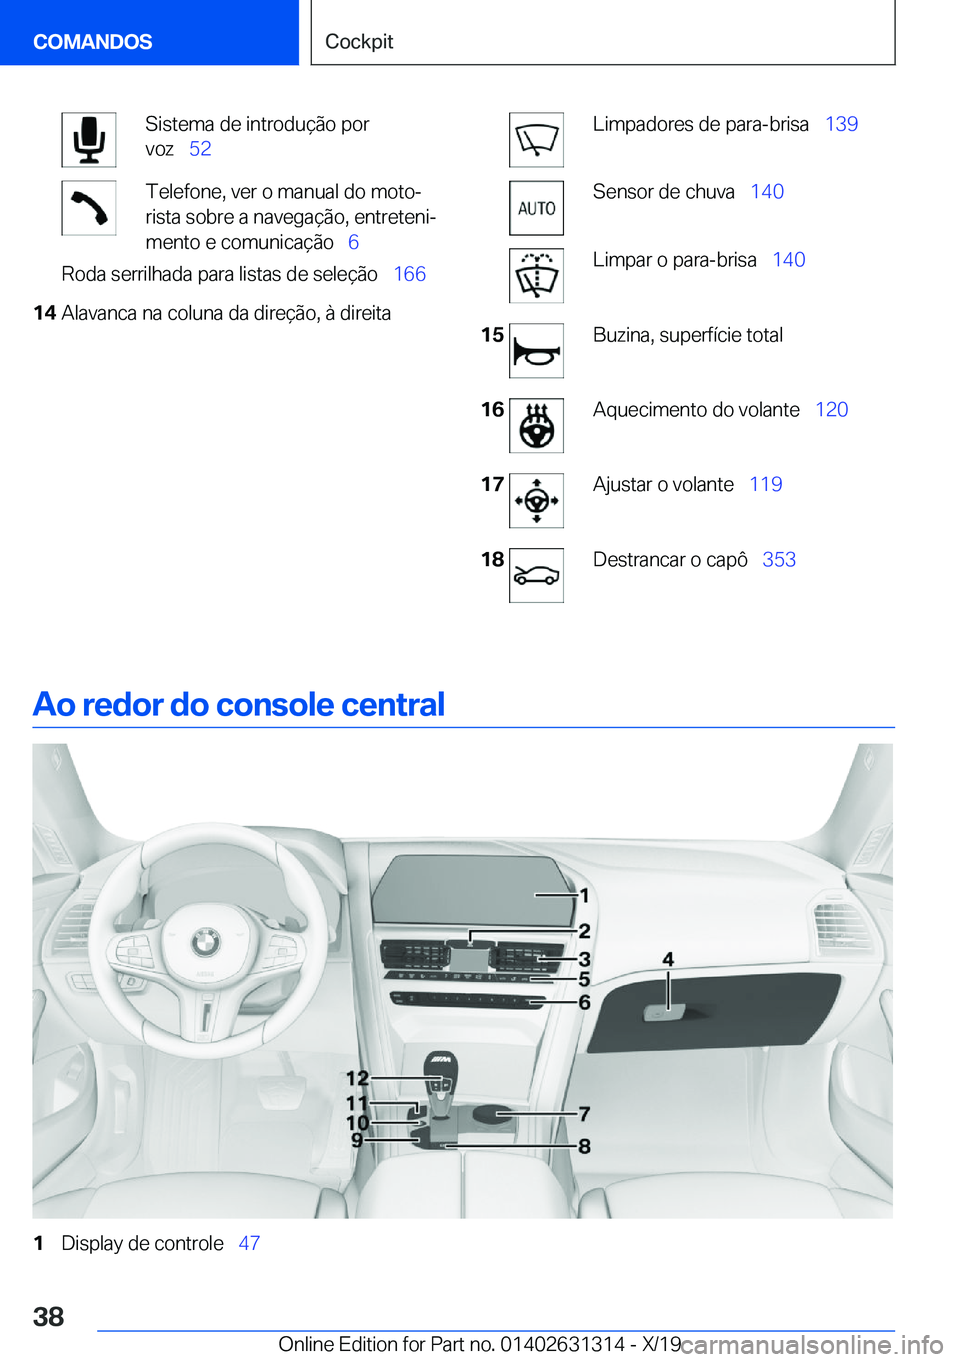 BMW M8 2020  Manual do condutor (in Portuguese) �S�i�s�t�e�m�a��d�e��i�n�t�r�o�d�u�